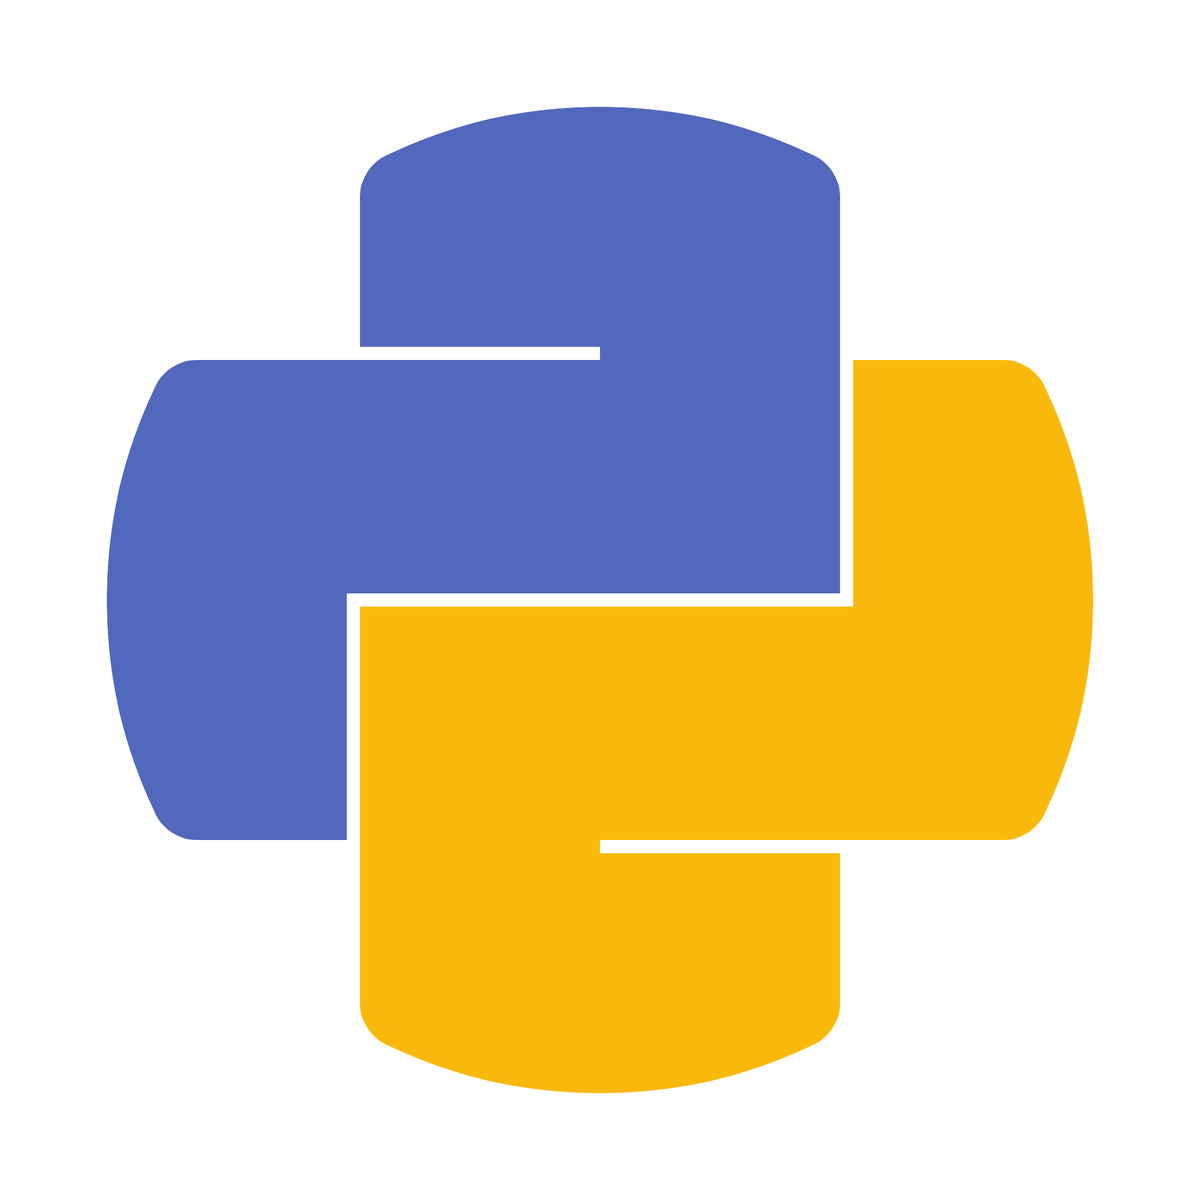 Python transparant